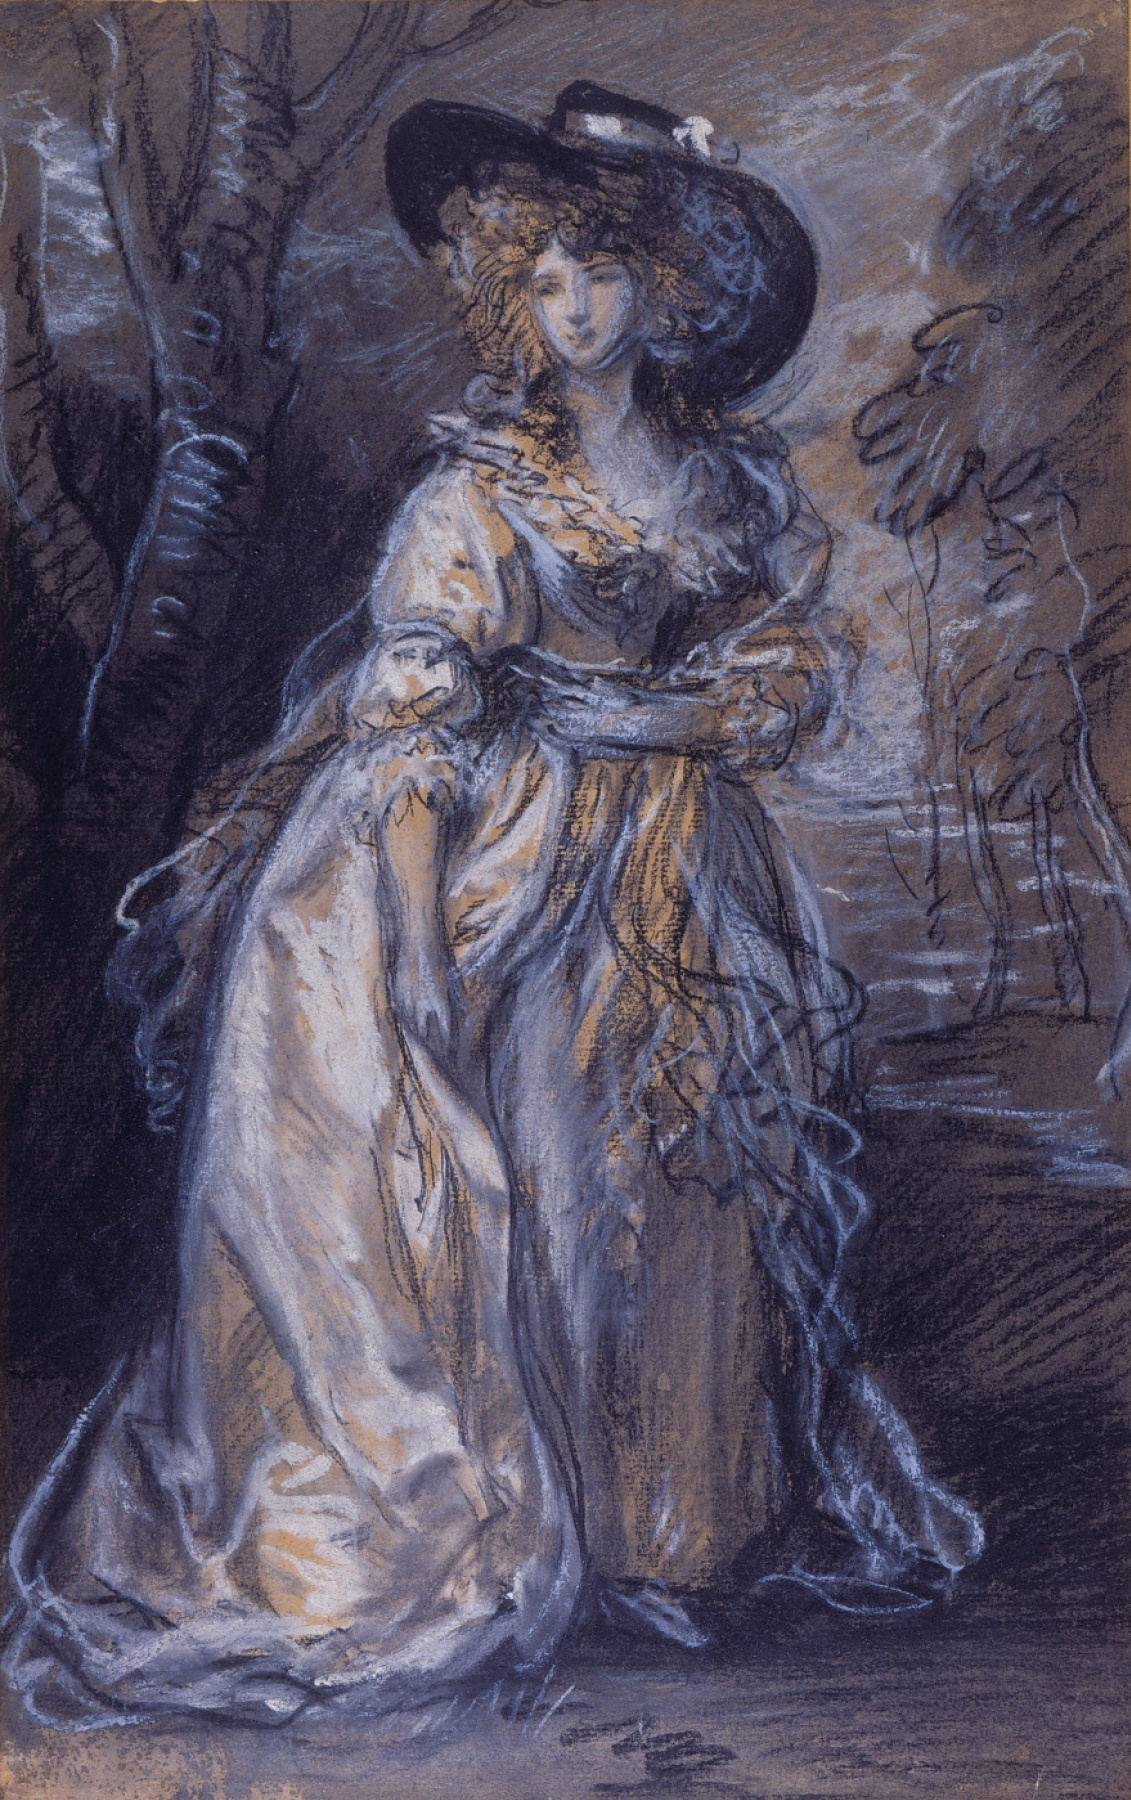 Thomas Gainsborough. Portrait of a woman. Sketch